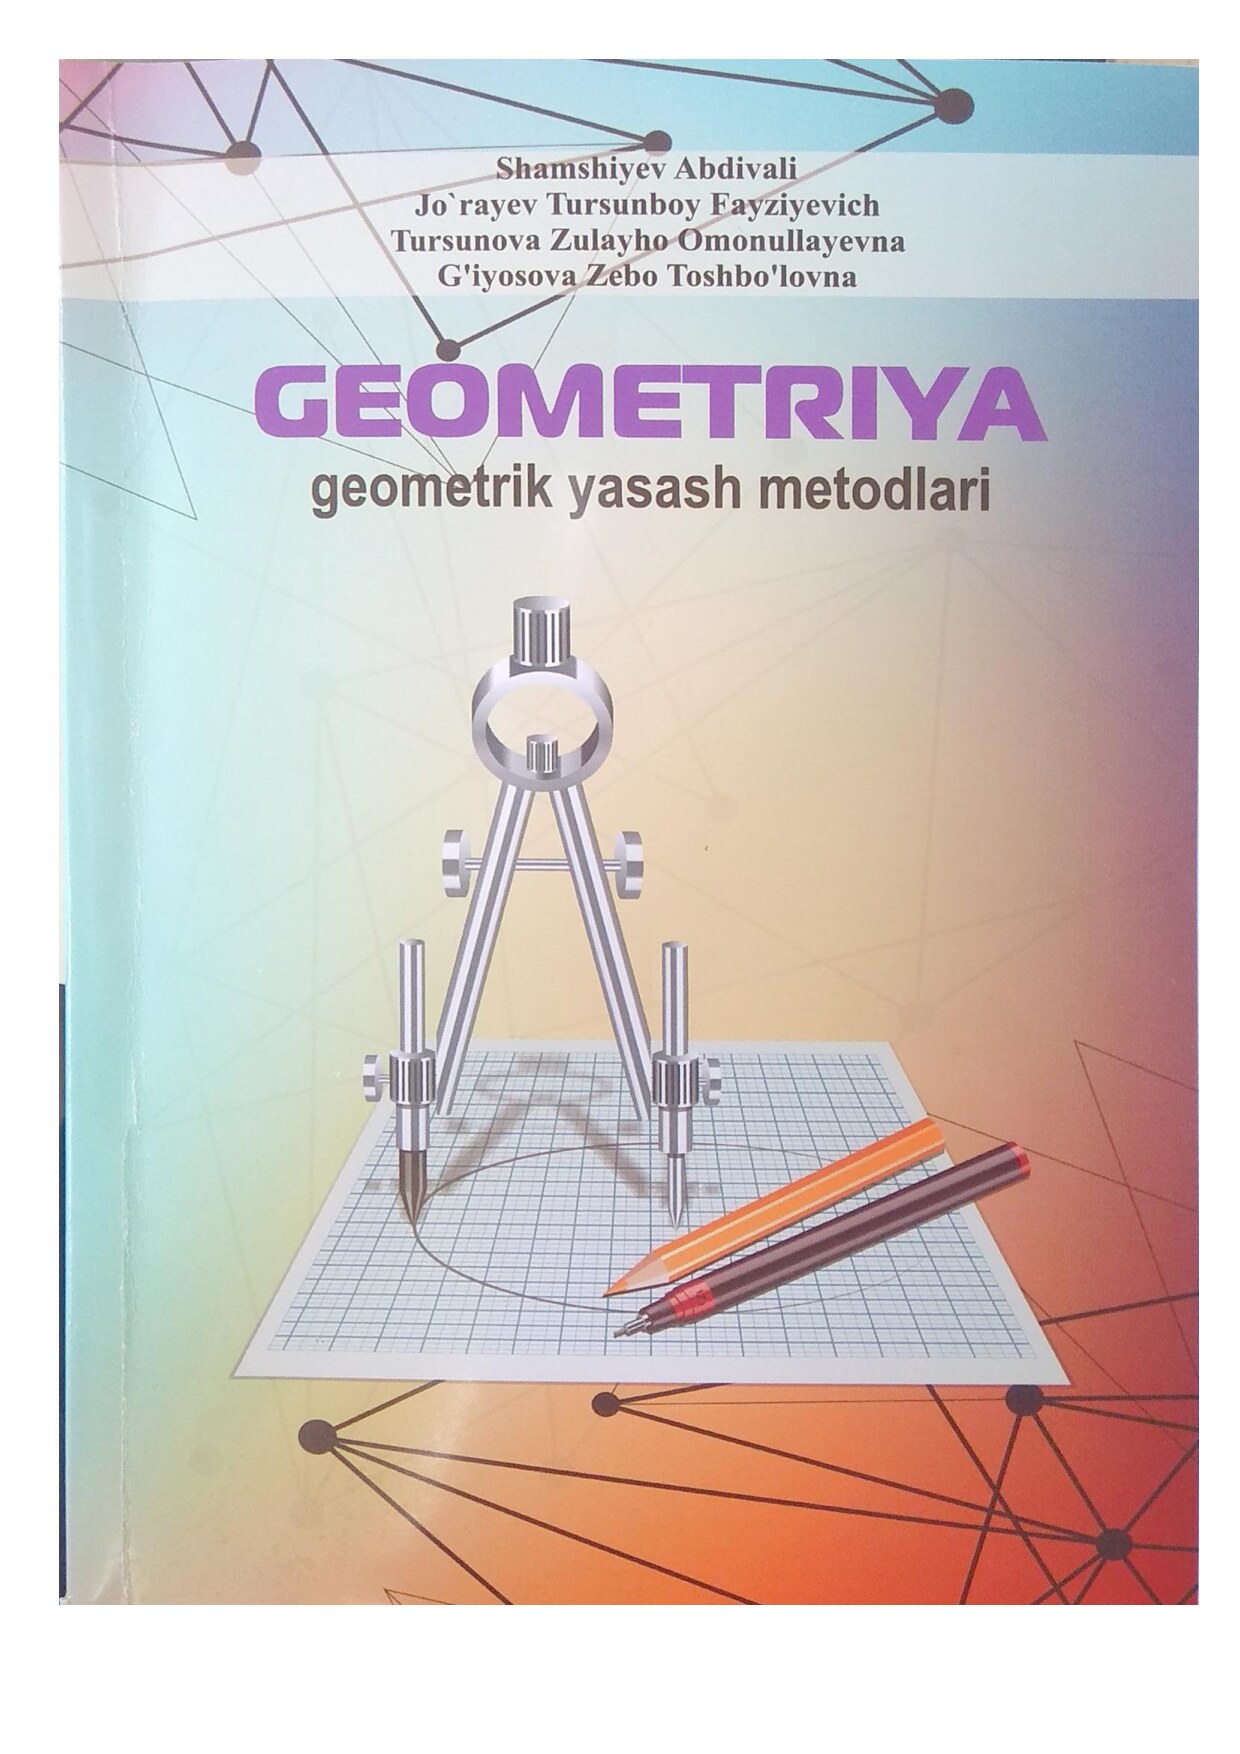 Geometriya Geometrik yasash